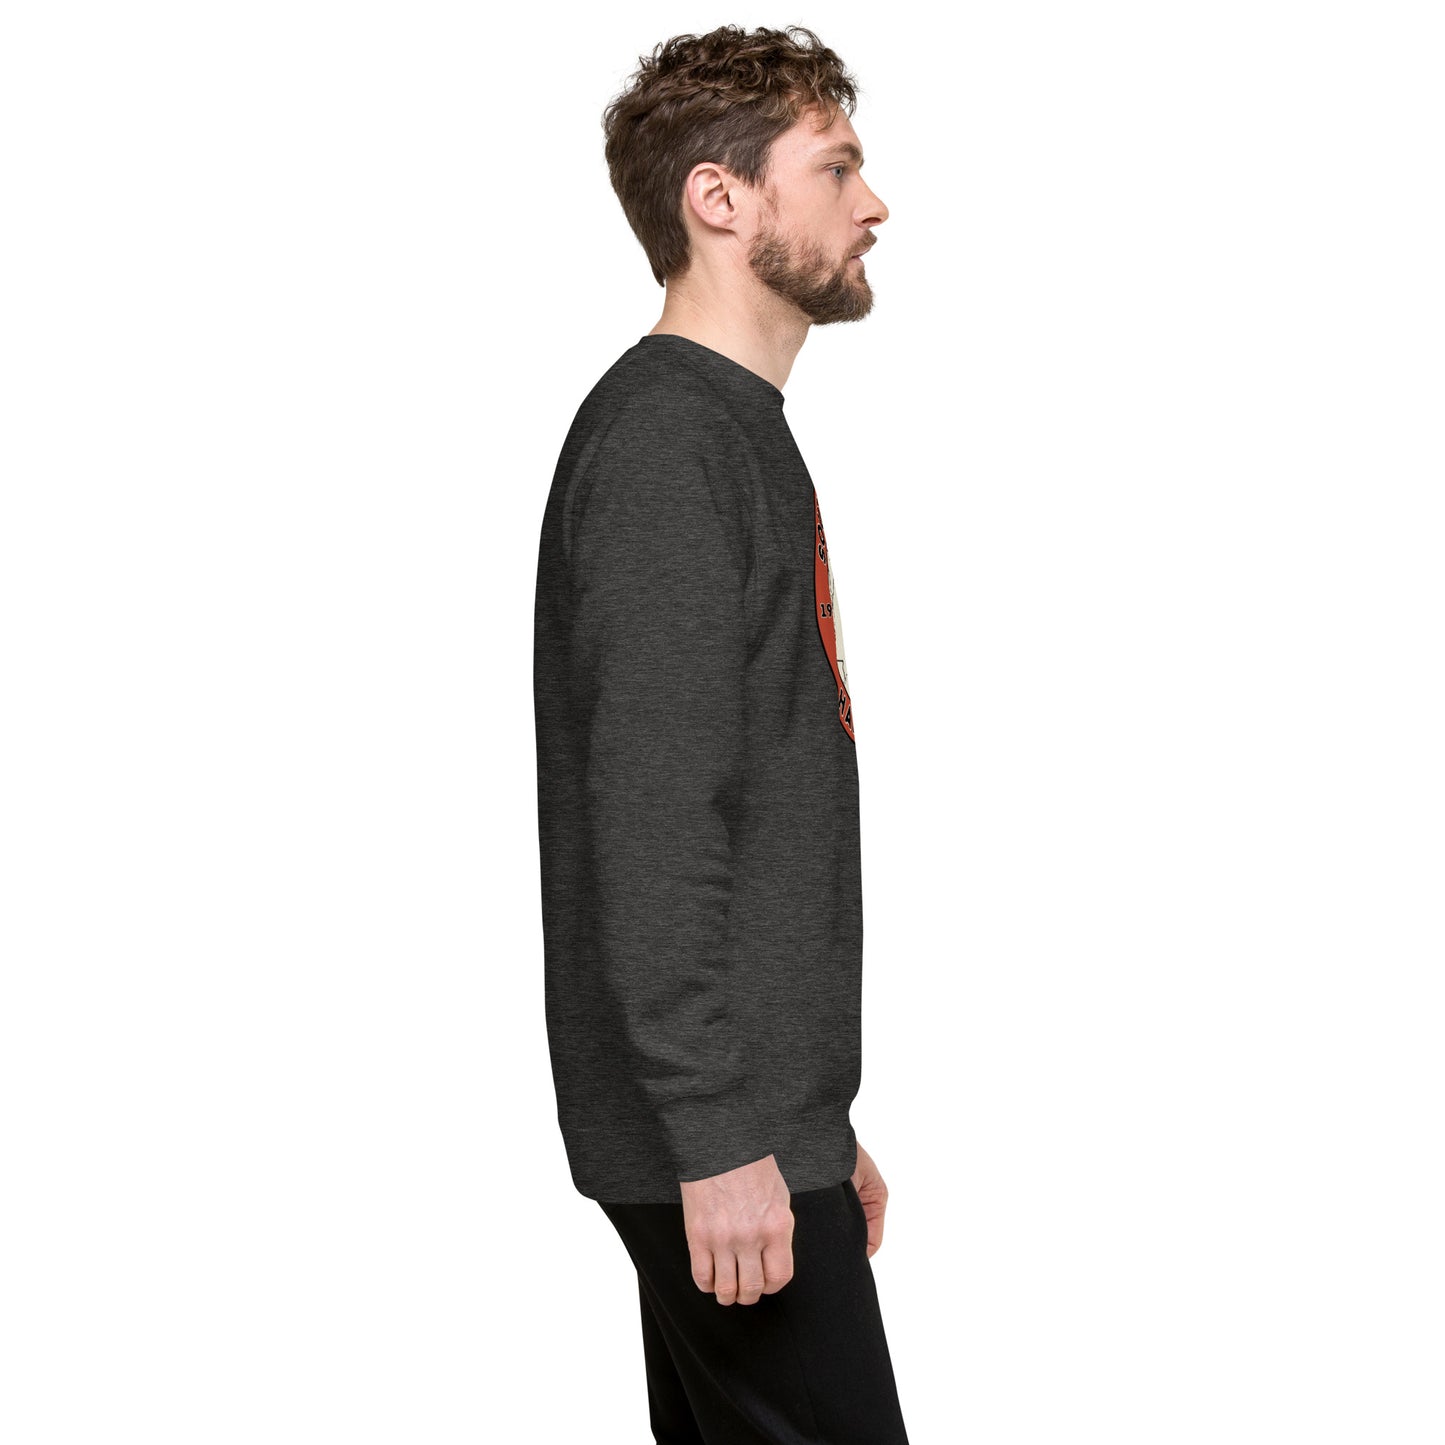 SHD Printed - Regular fit Unisex Premium Sweatshirt